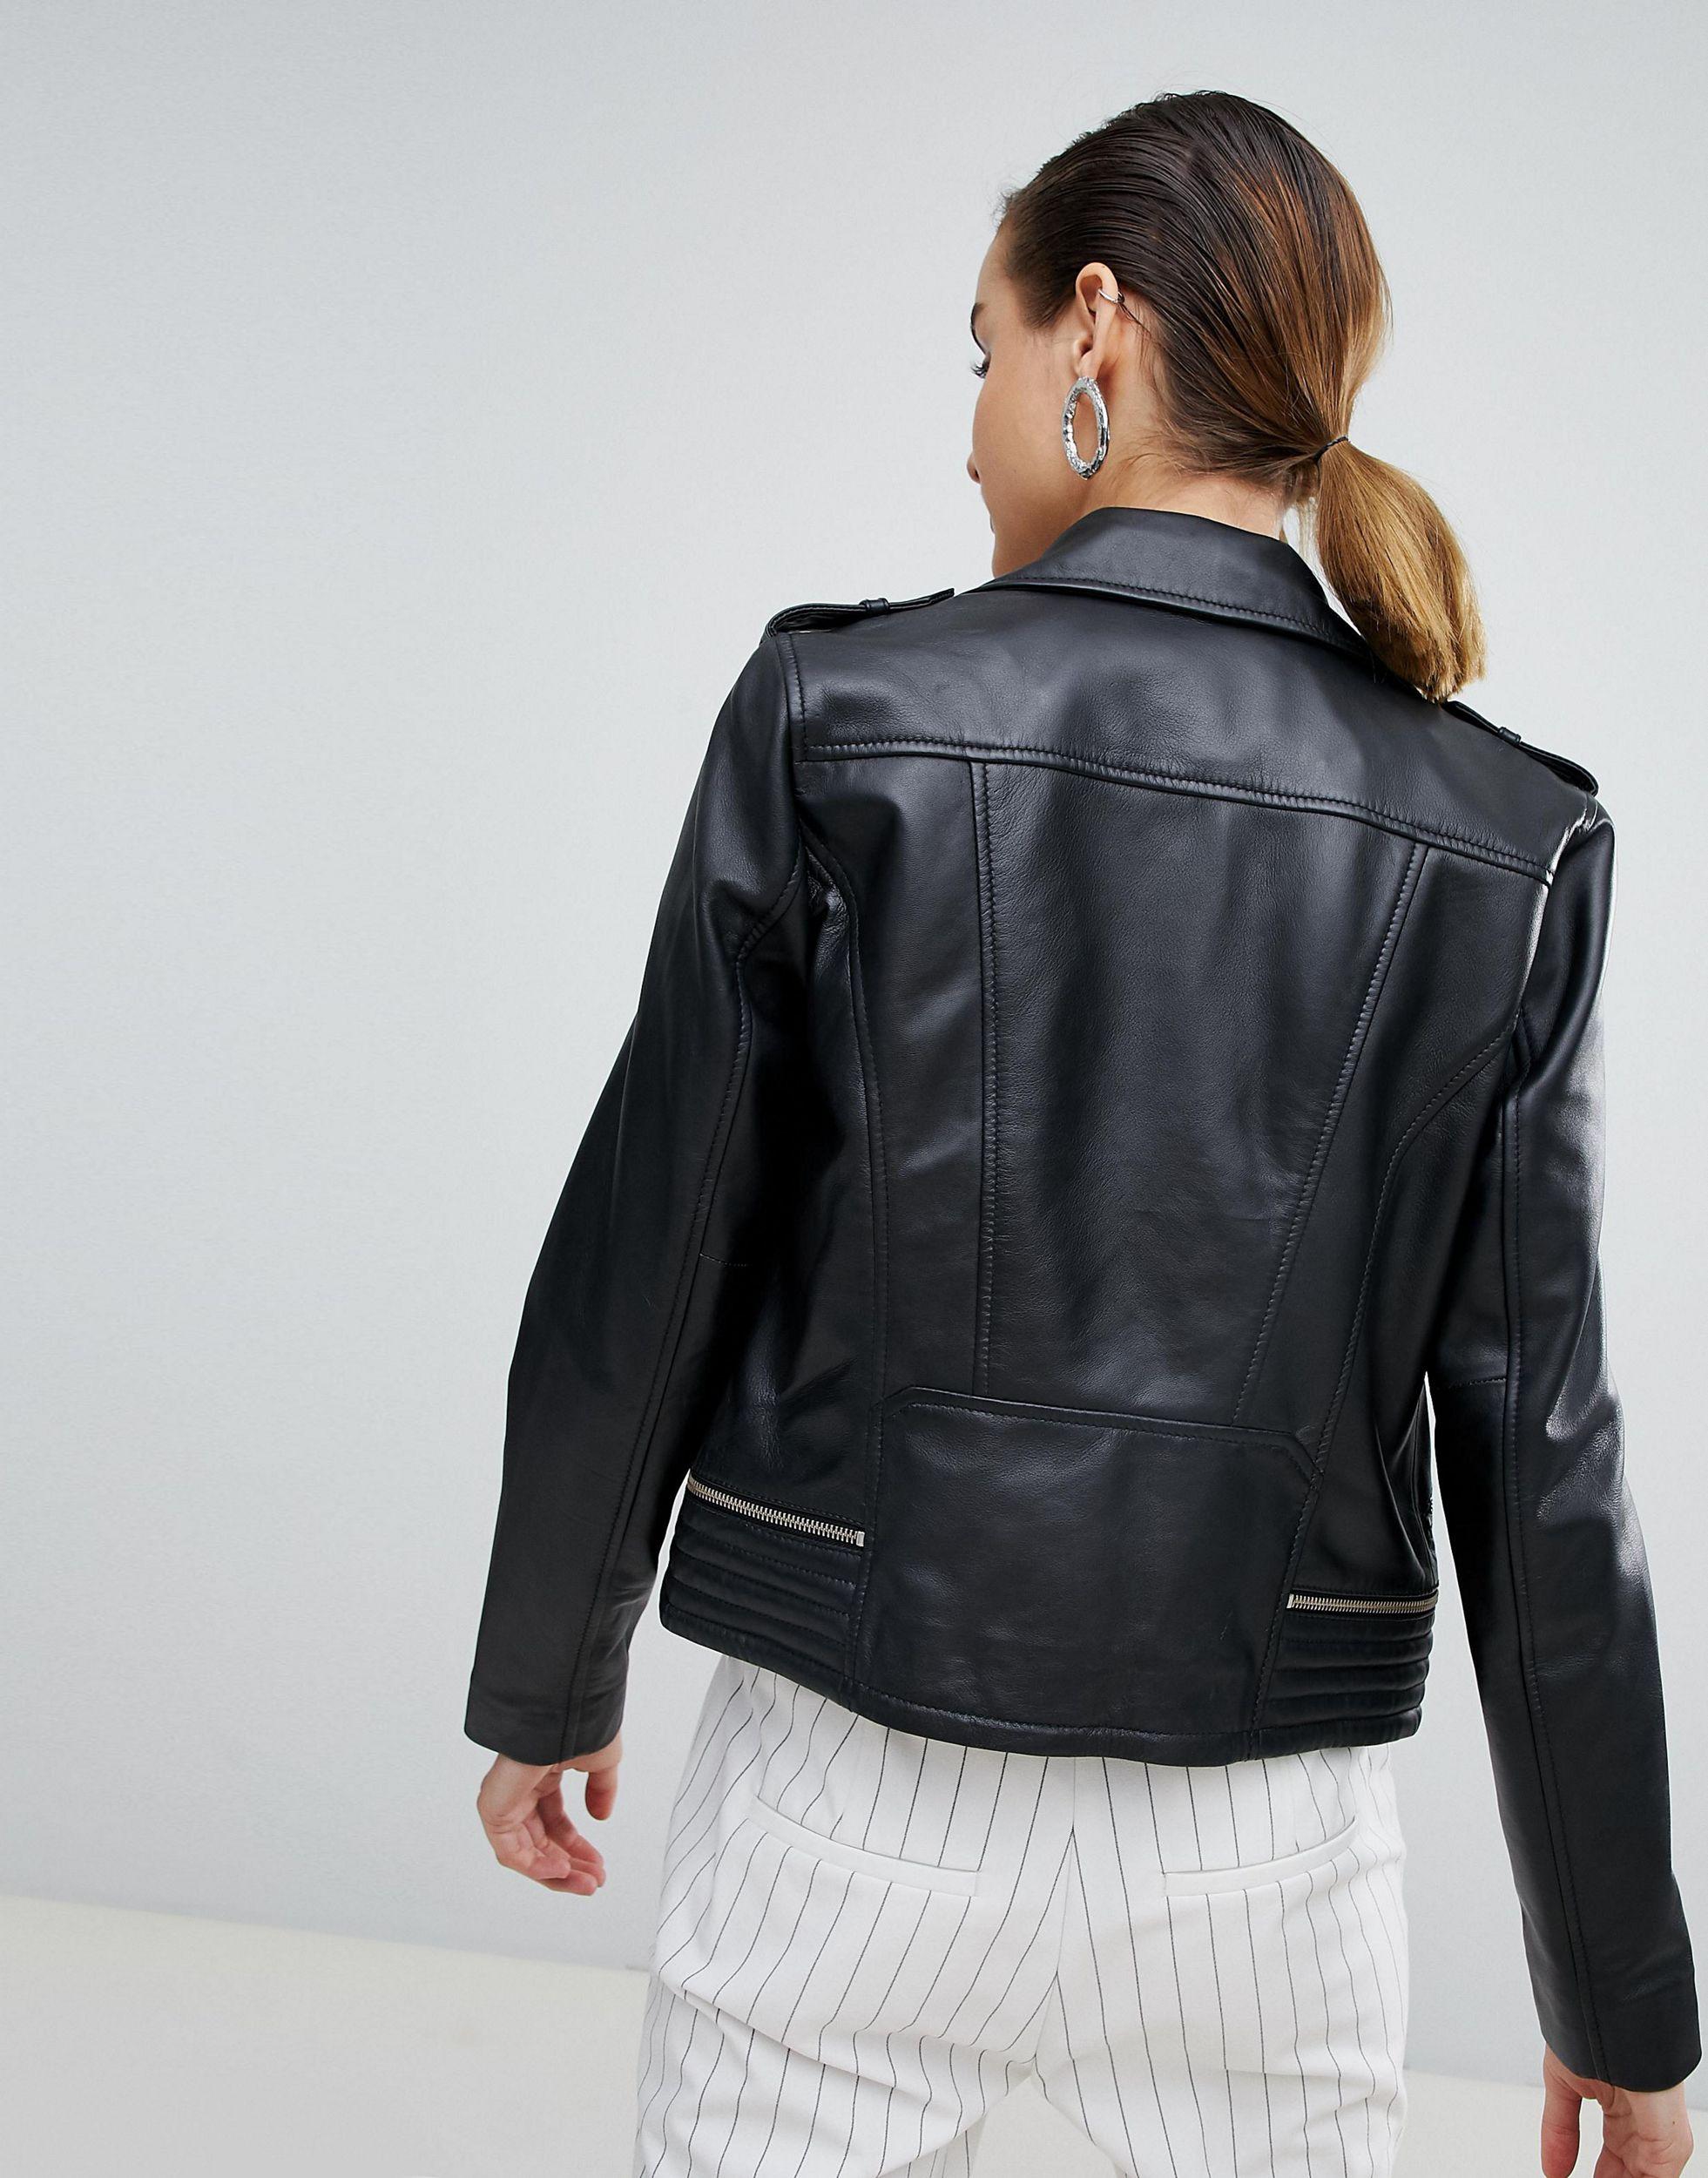 SELECTED Femme Leather Biker Jacket in Black - Lyst